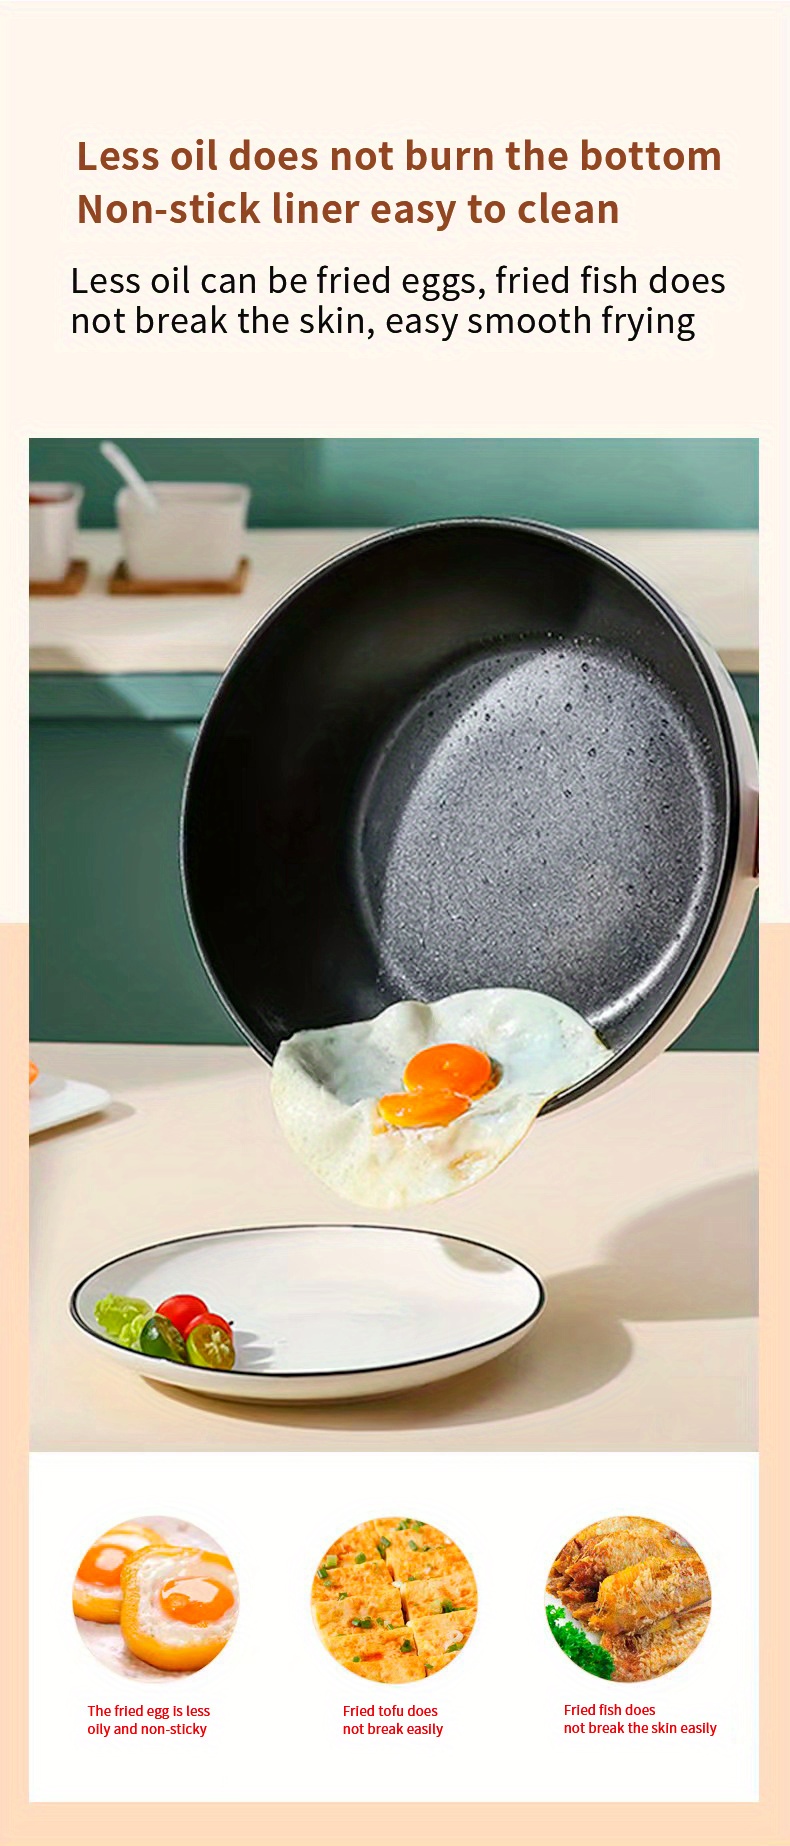 Yikewei pot set non-stick household three-piece kitchen frying pan